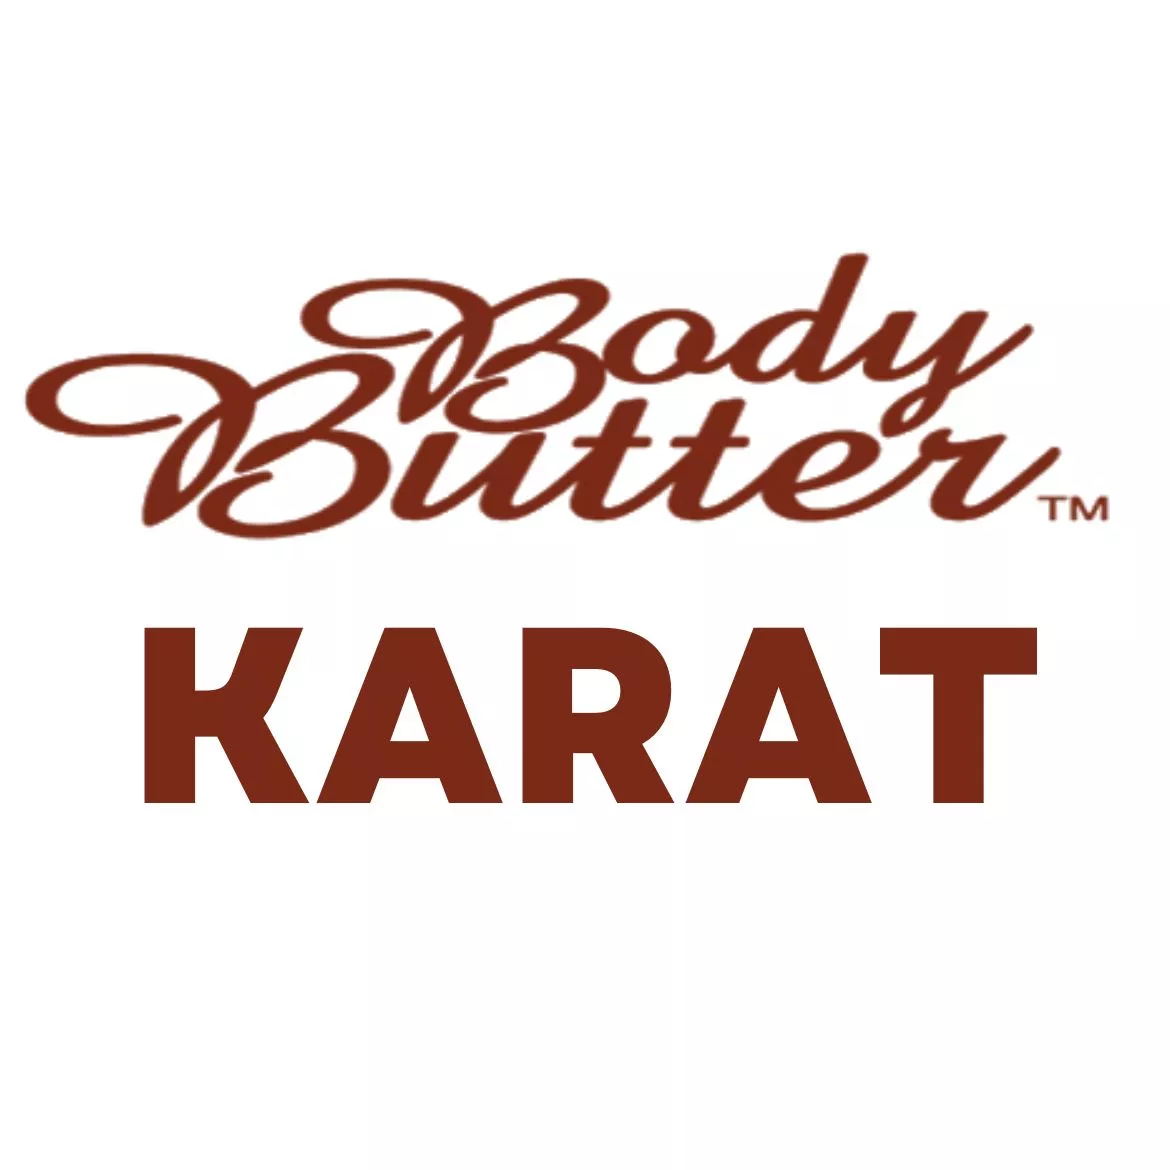 Body Butter Karat Tanning Lotion